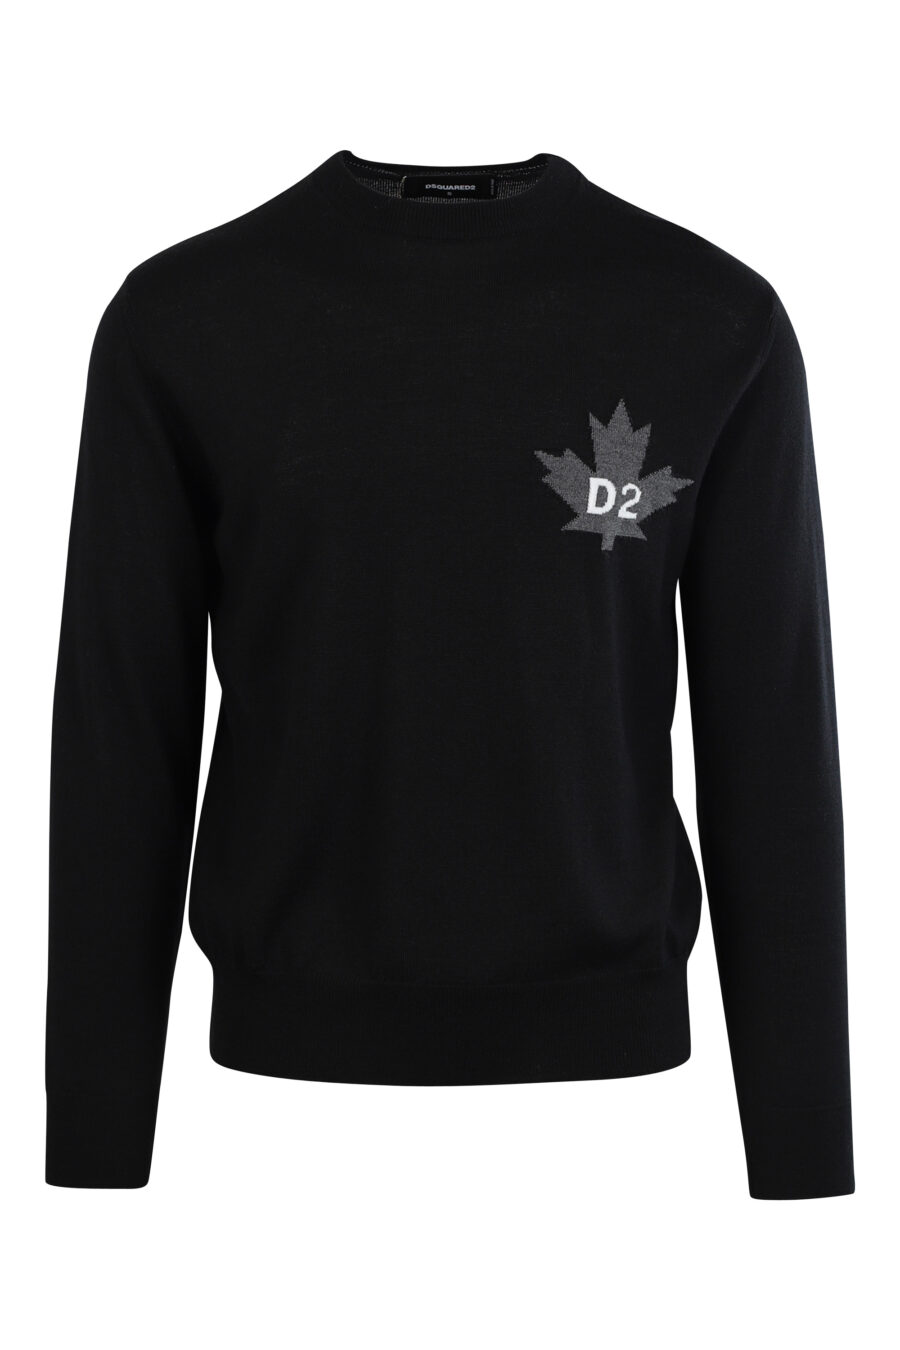 Black jumper with mini-logo "D2" on leaf - 8054148057916